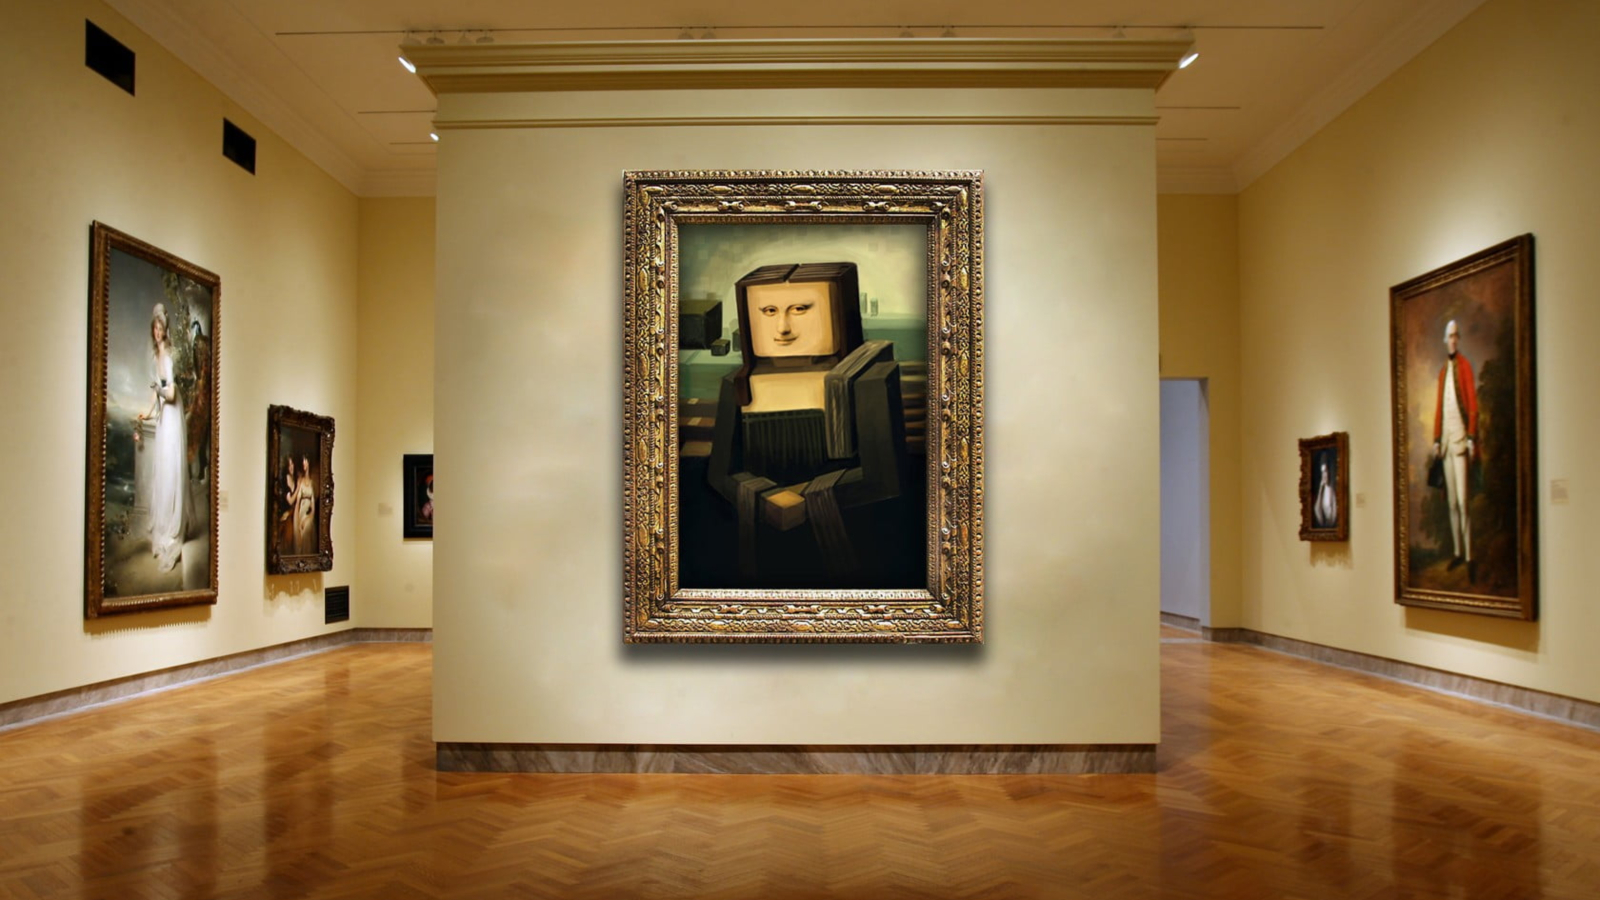 Minecraft Mona Lisa - Original image